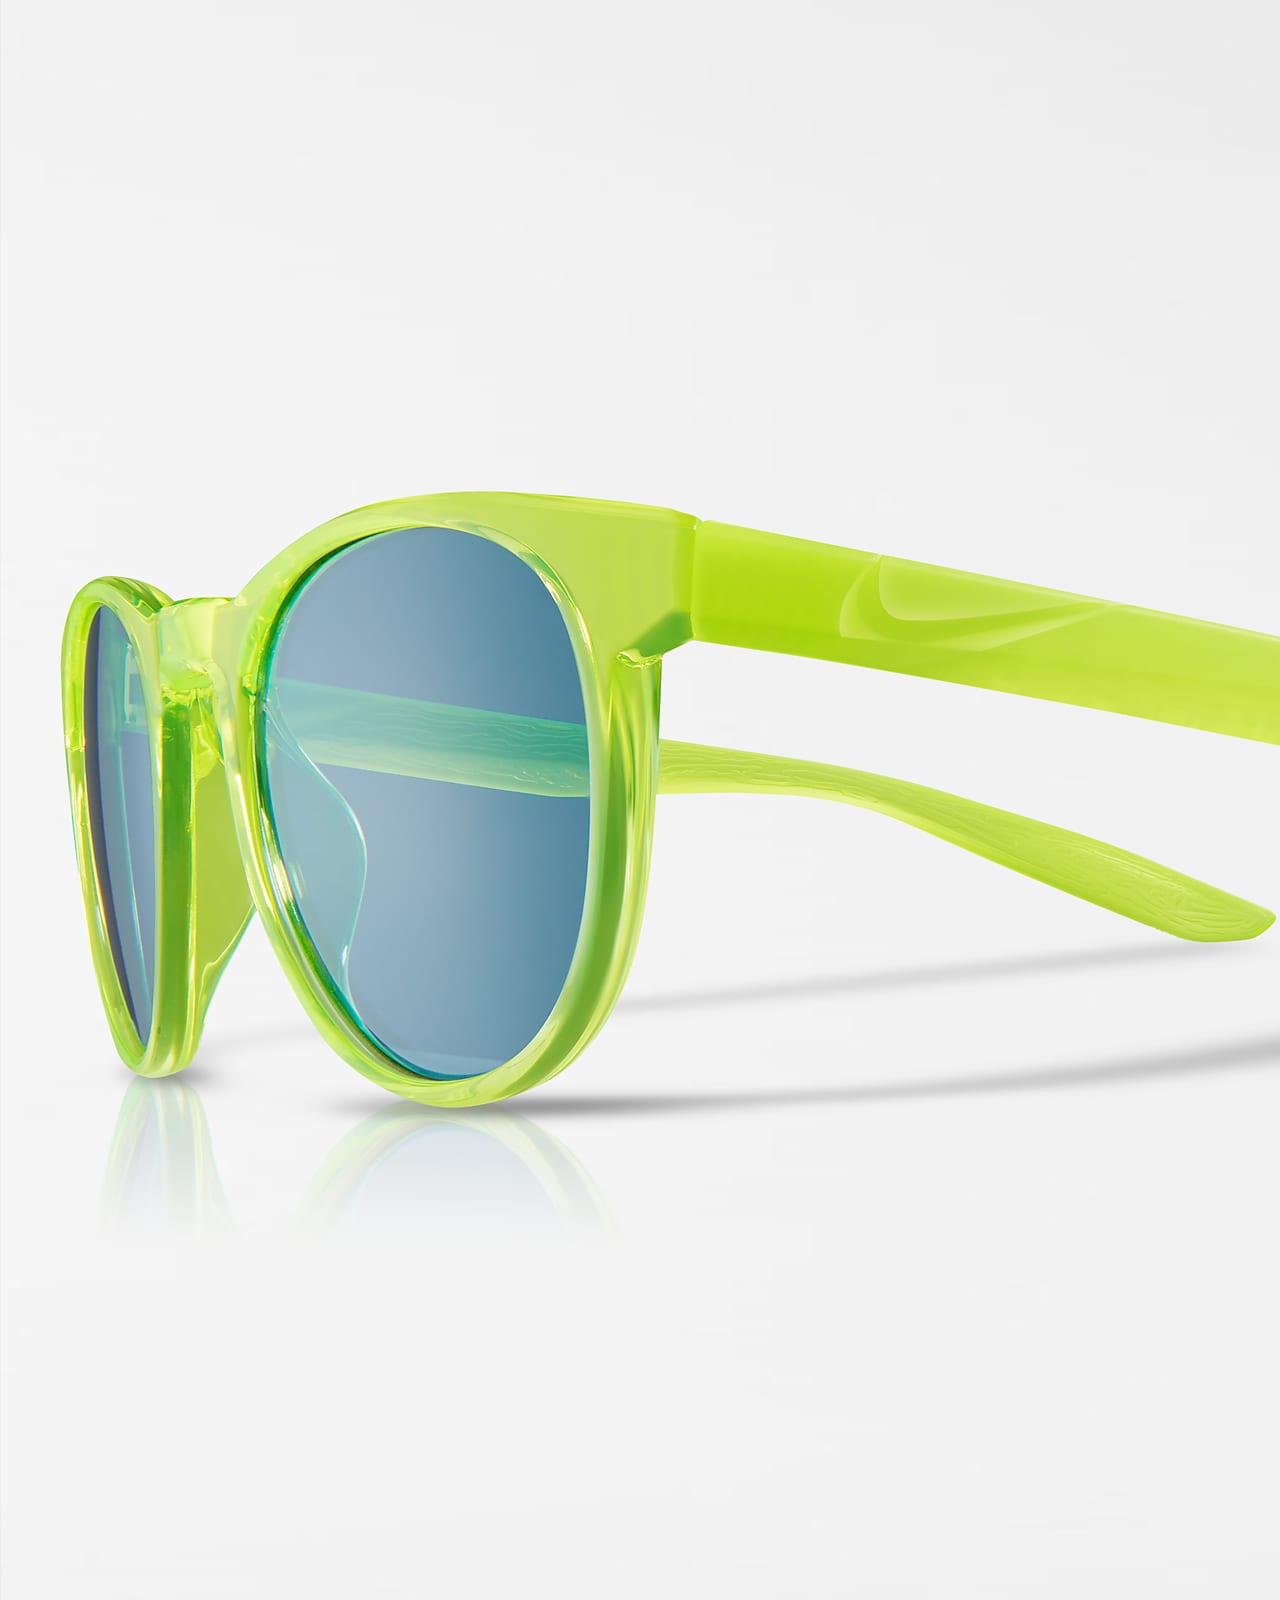 Nike Horizon Ascent S Sunglasses